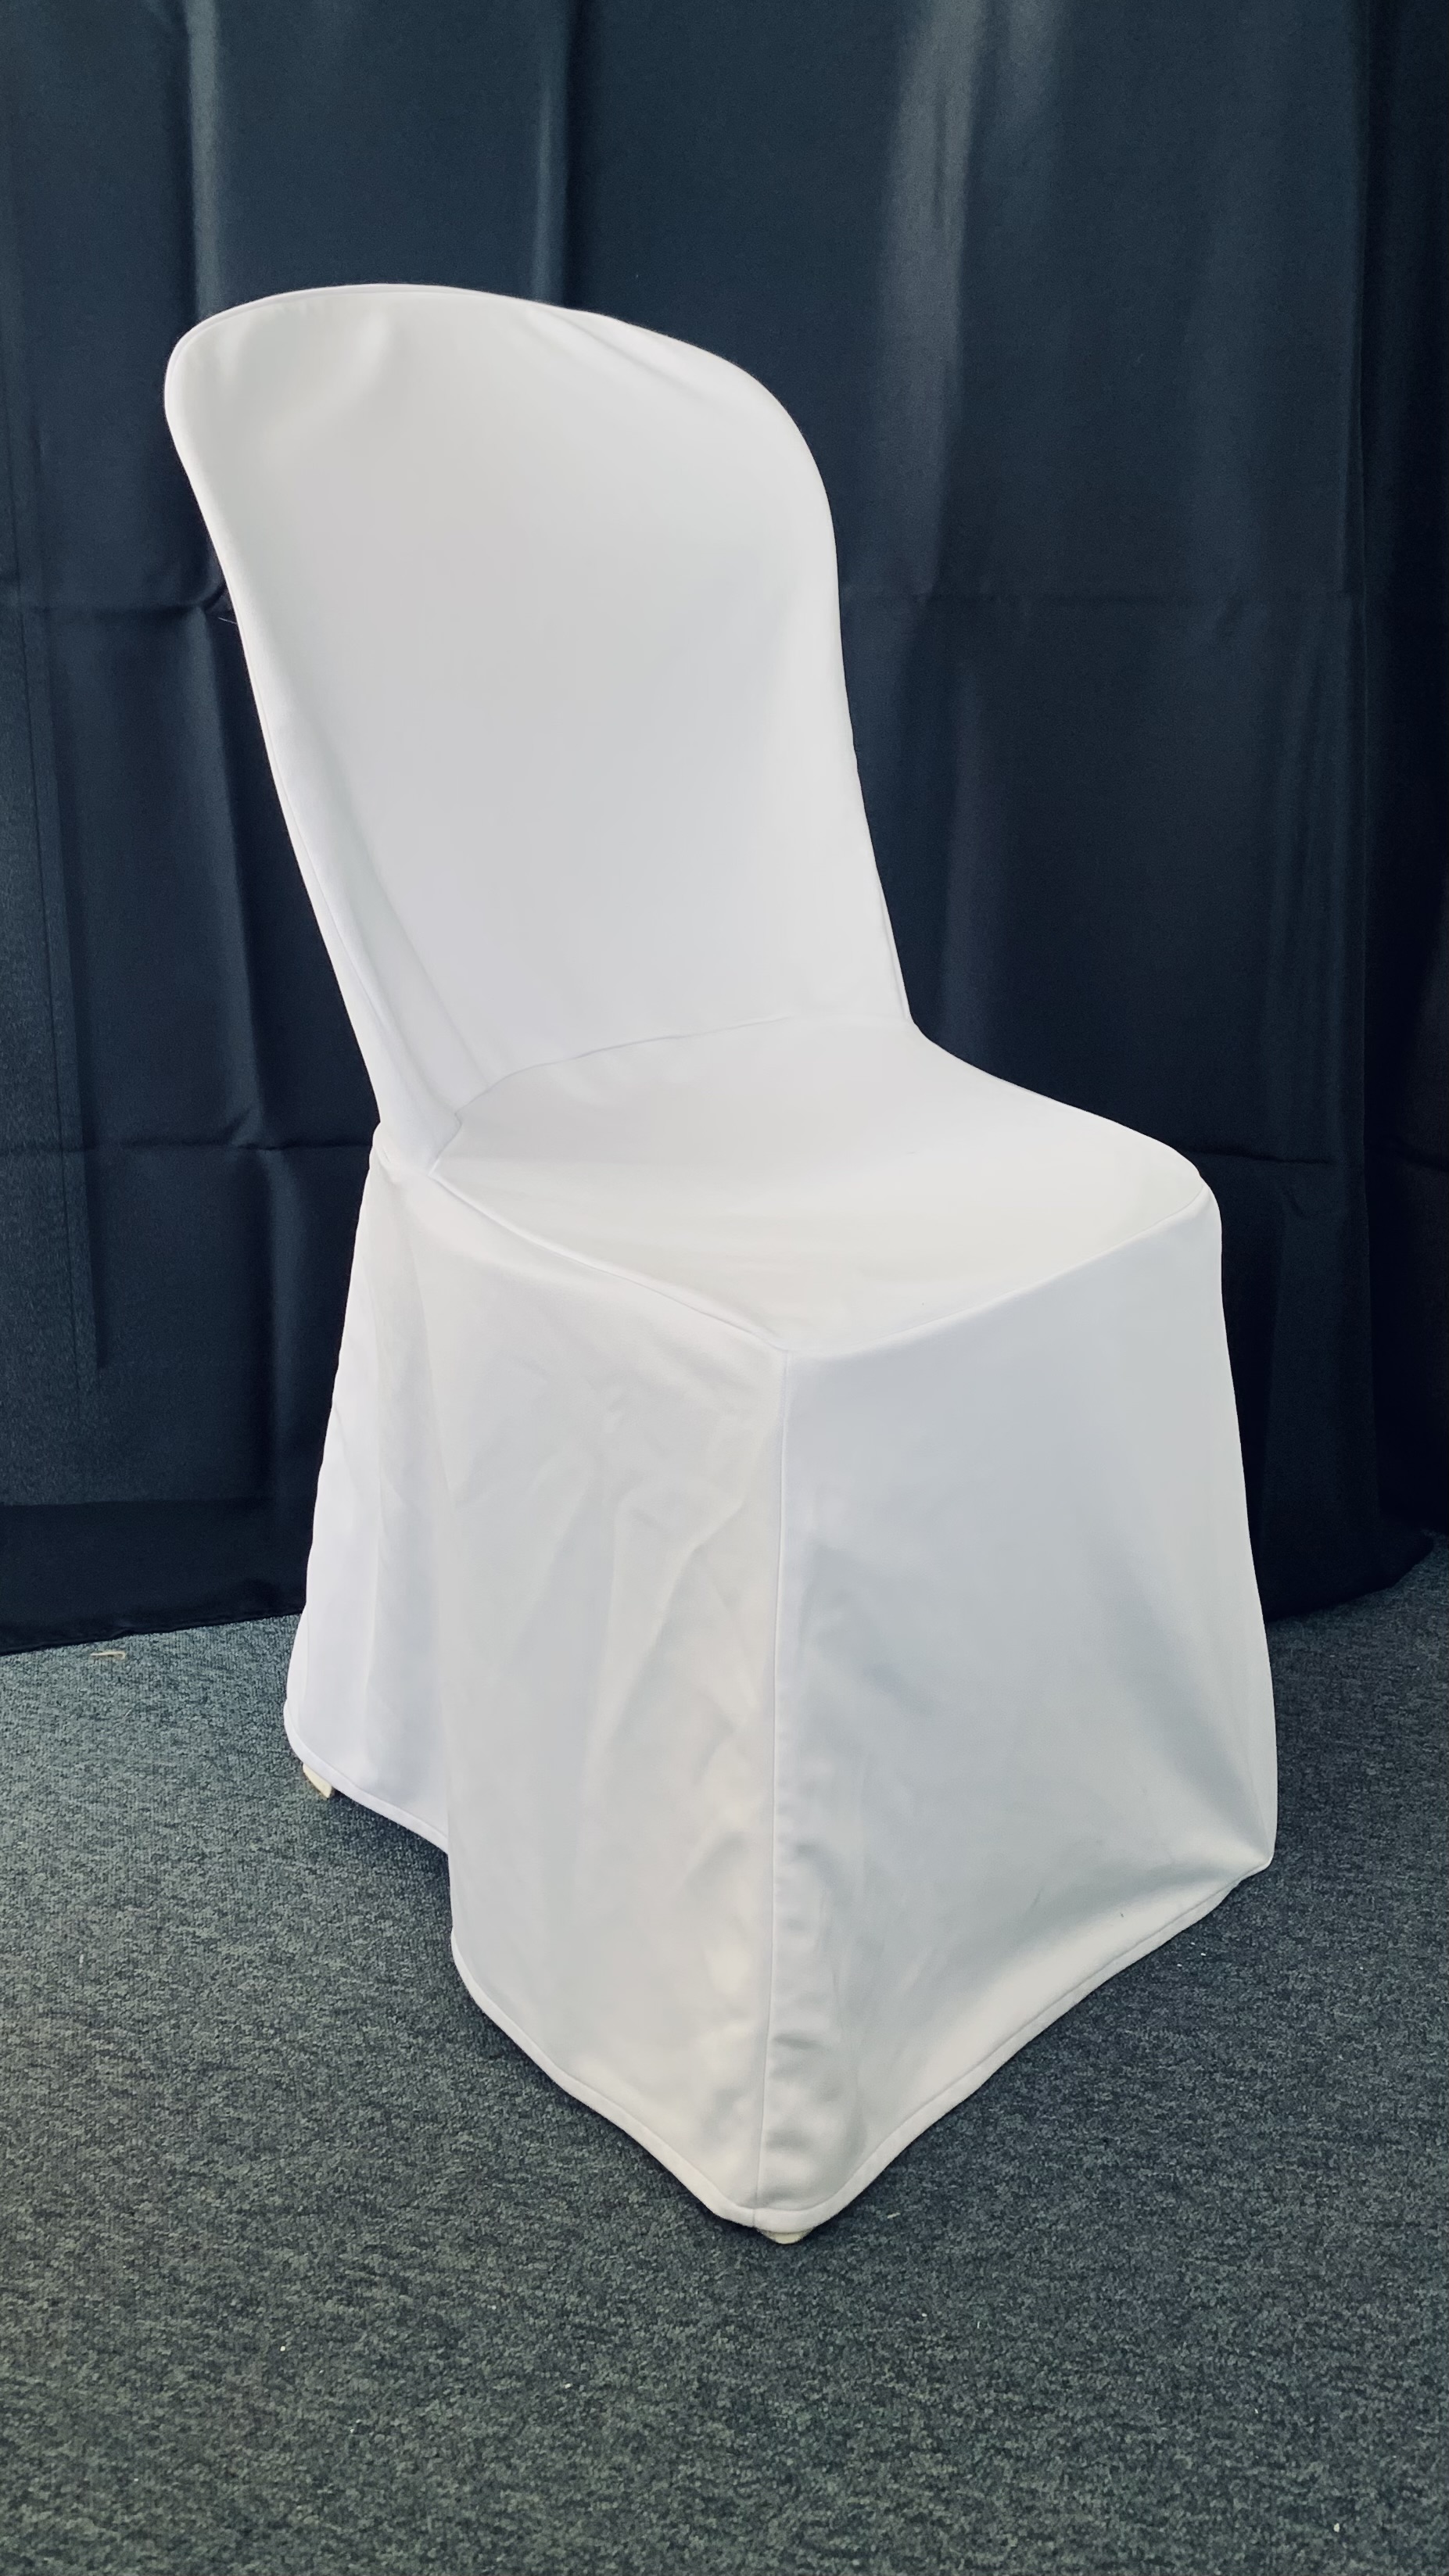 Housse blanche tissu pour chaise